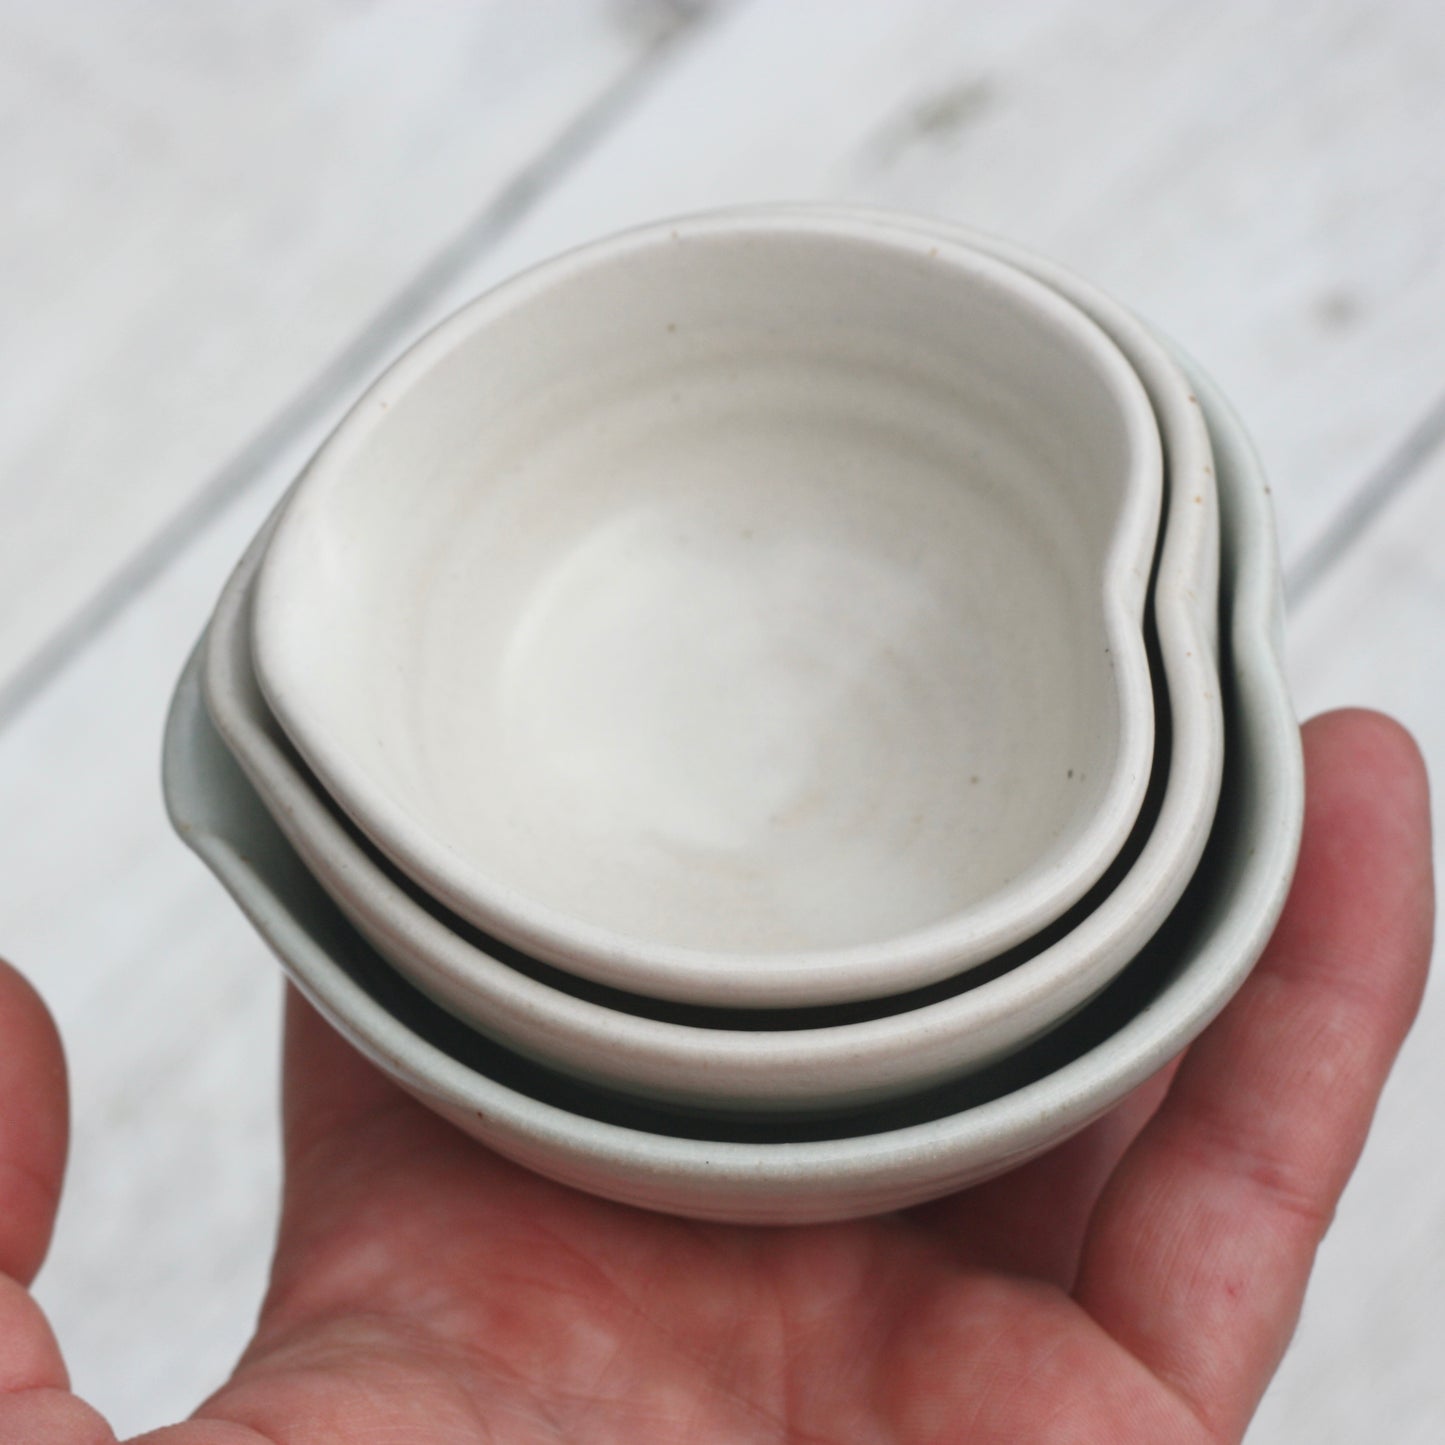 Small Set Stoneware Nesting Heart dishes in White Glazes